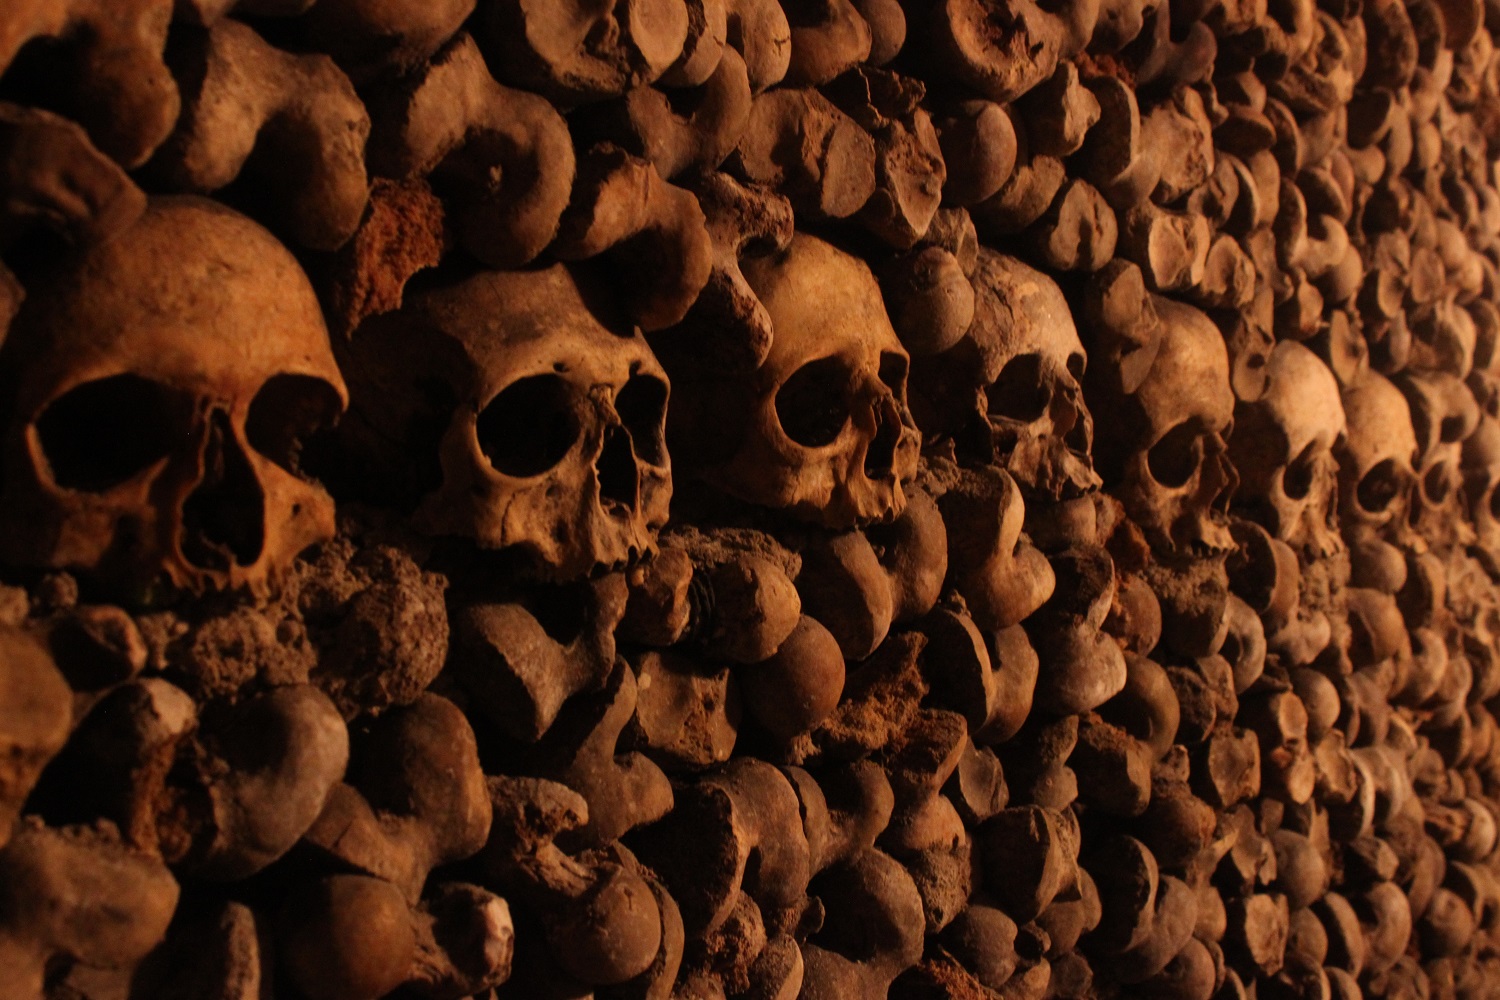 The Catacombs, Paris